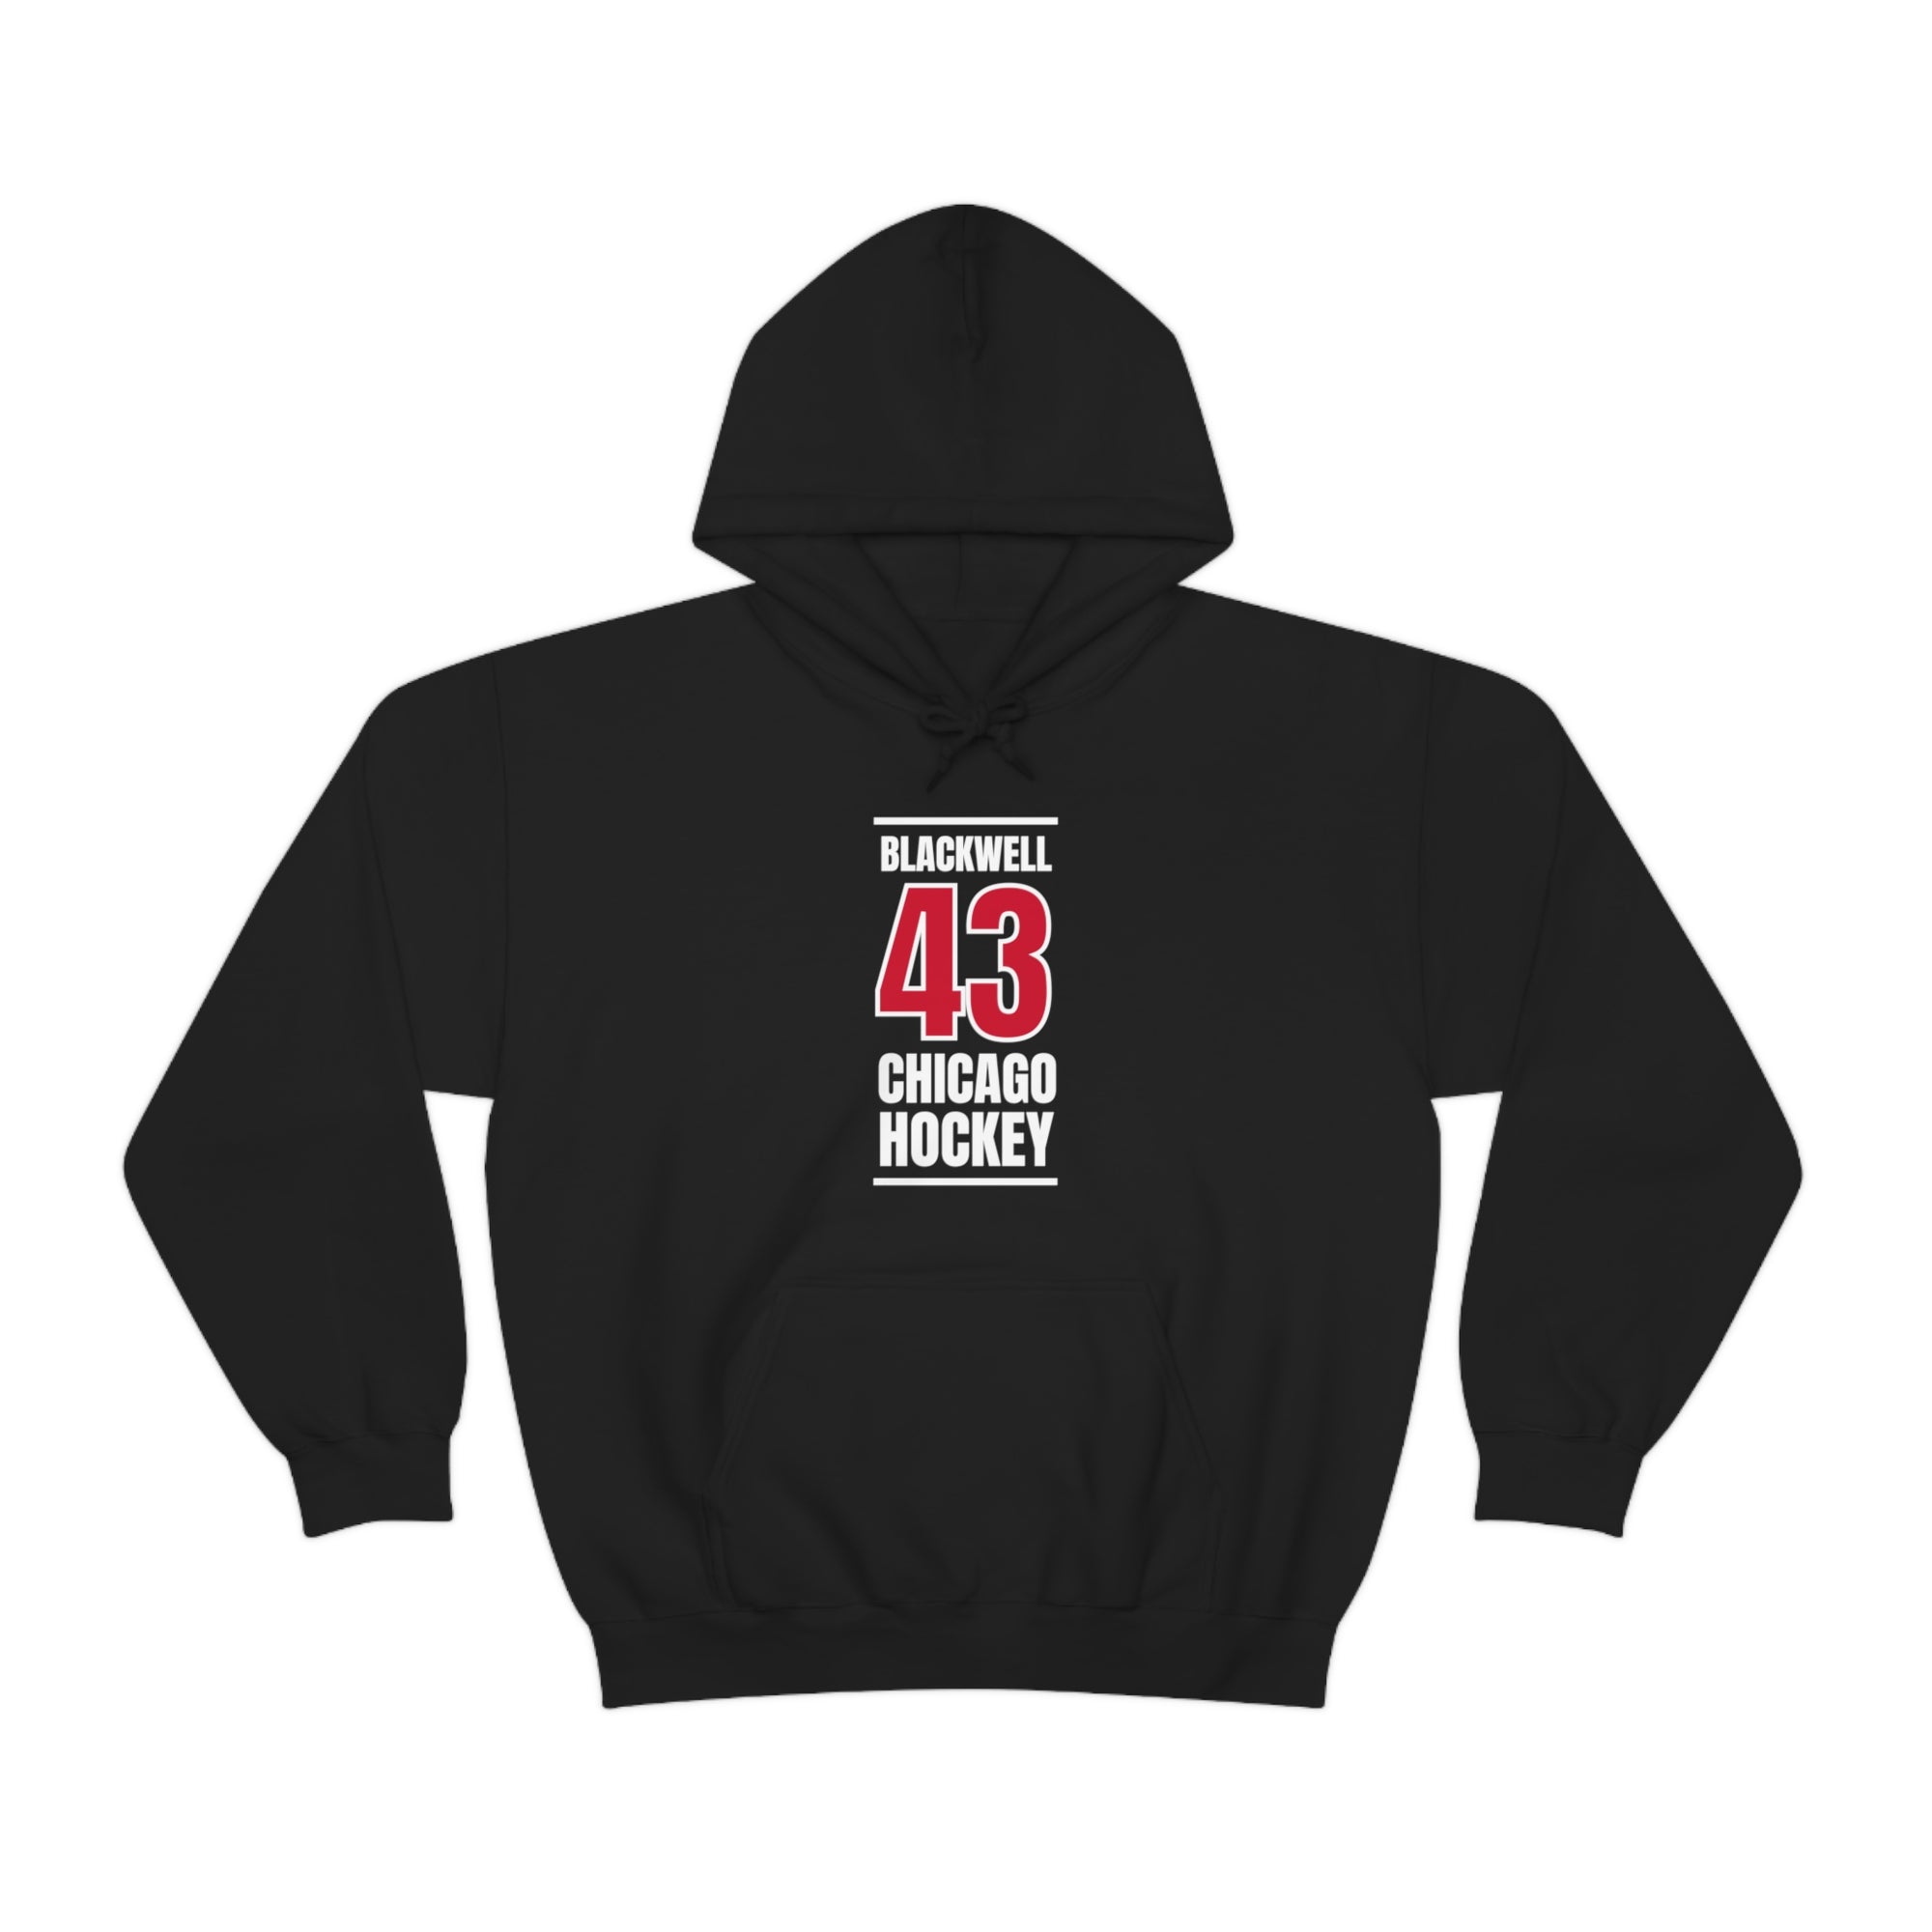 Blackwell 43 Chicago Hockey Red Vertical Design Unisex Hooded Sweatshirt